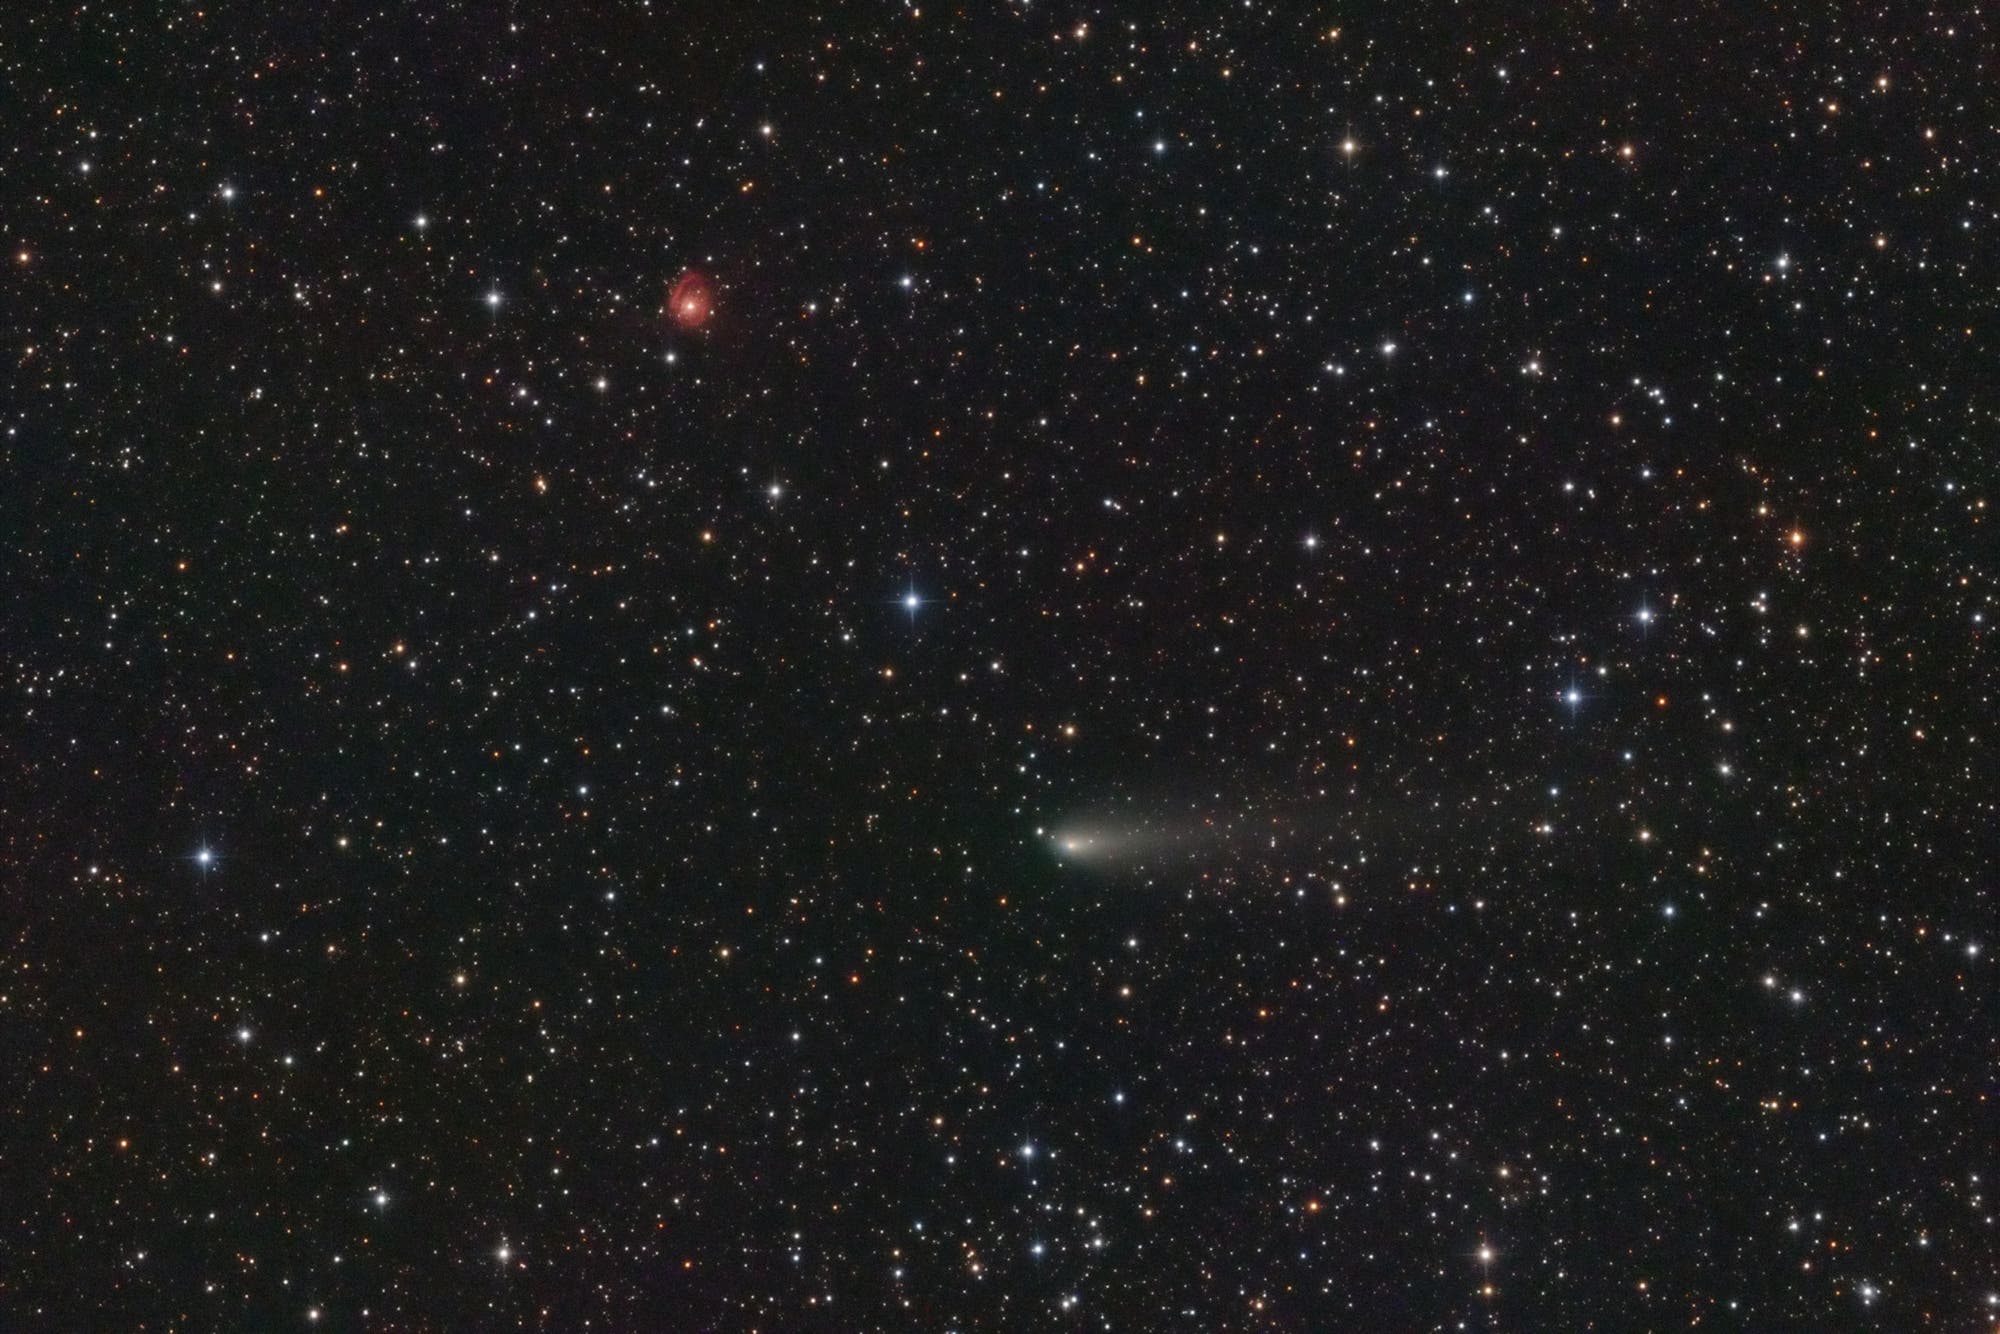 Comet and Cometary Nebula